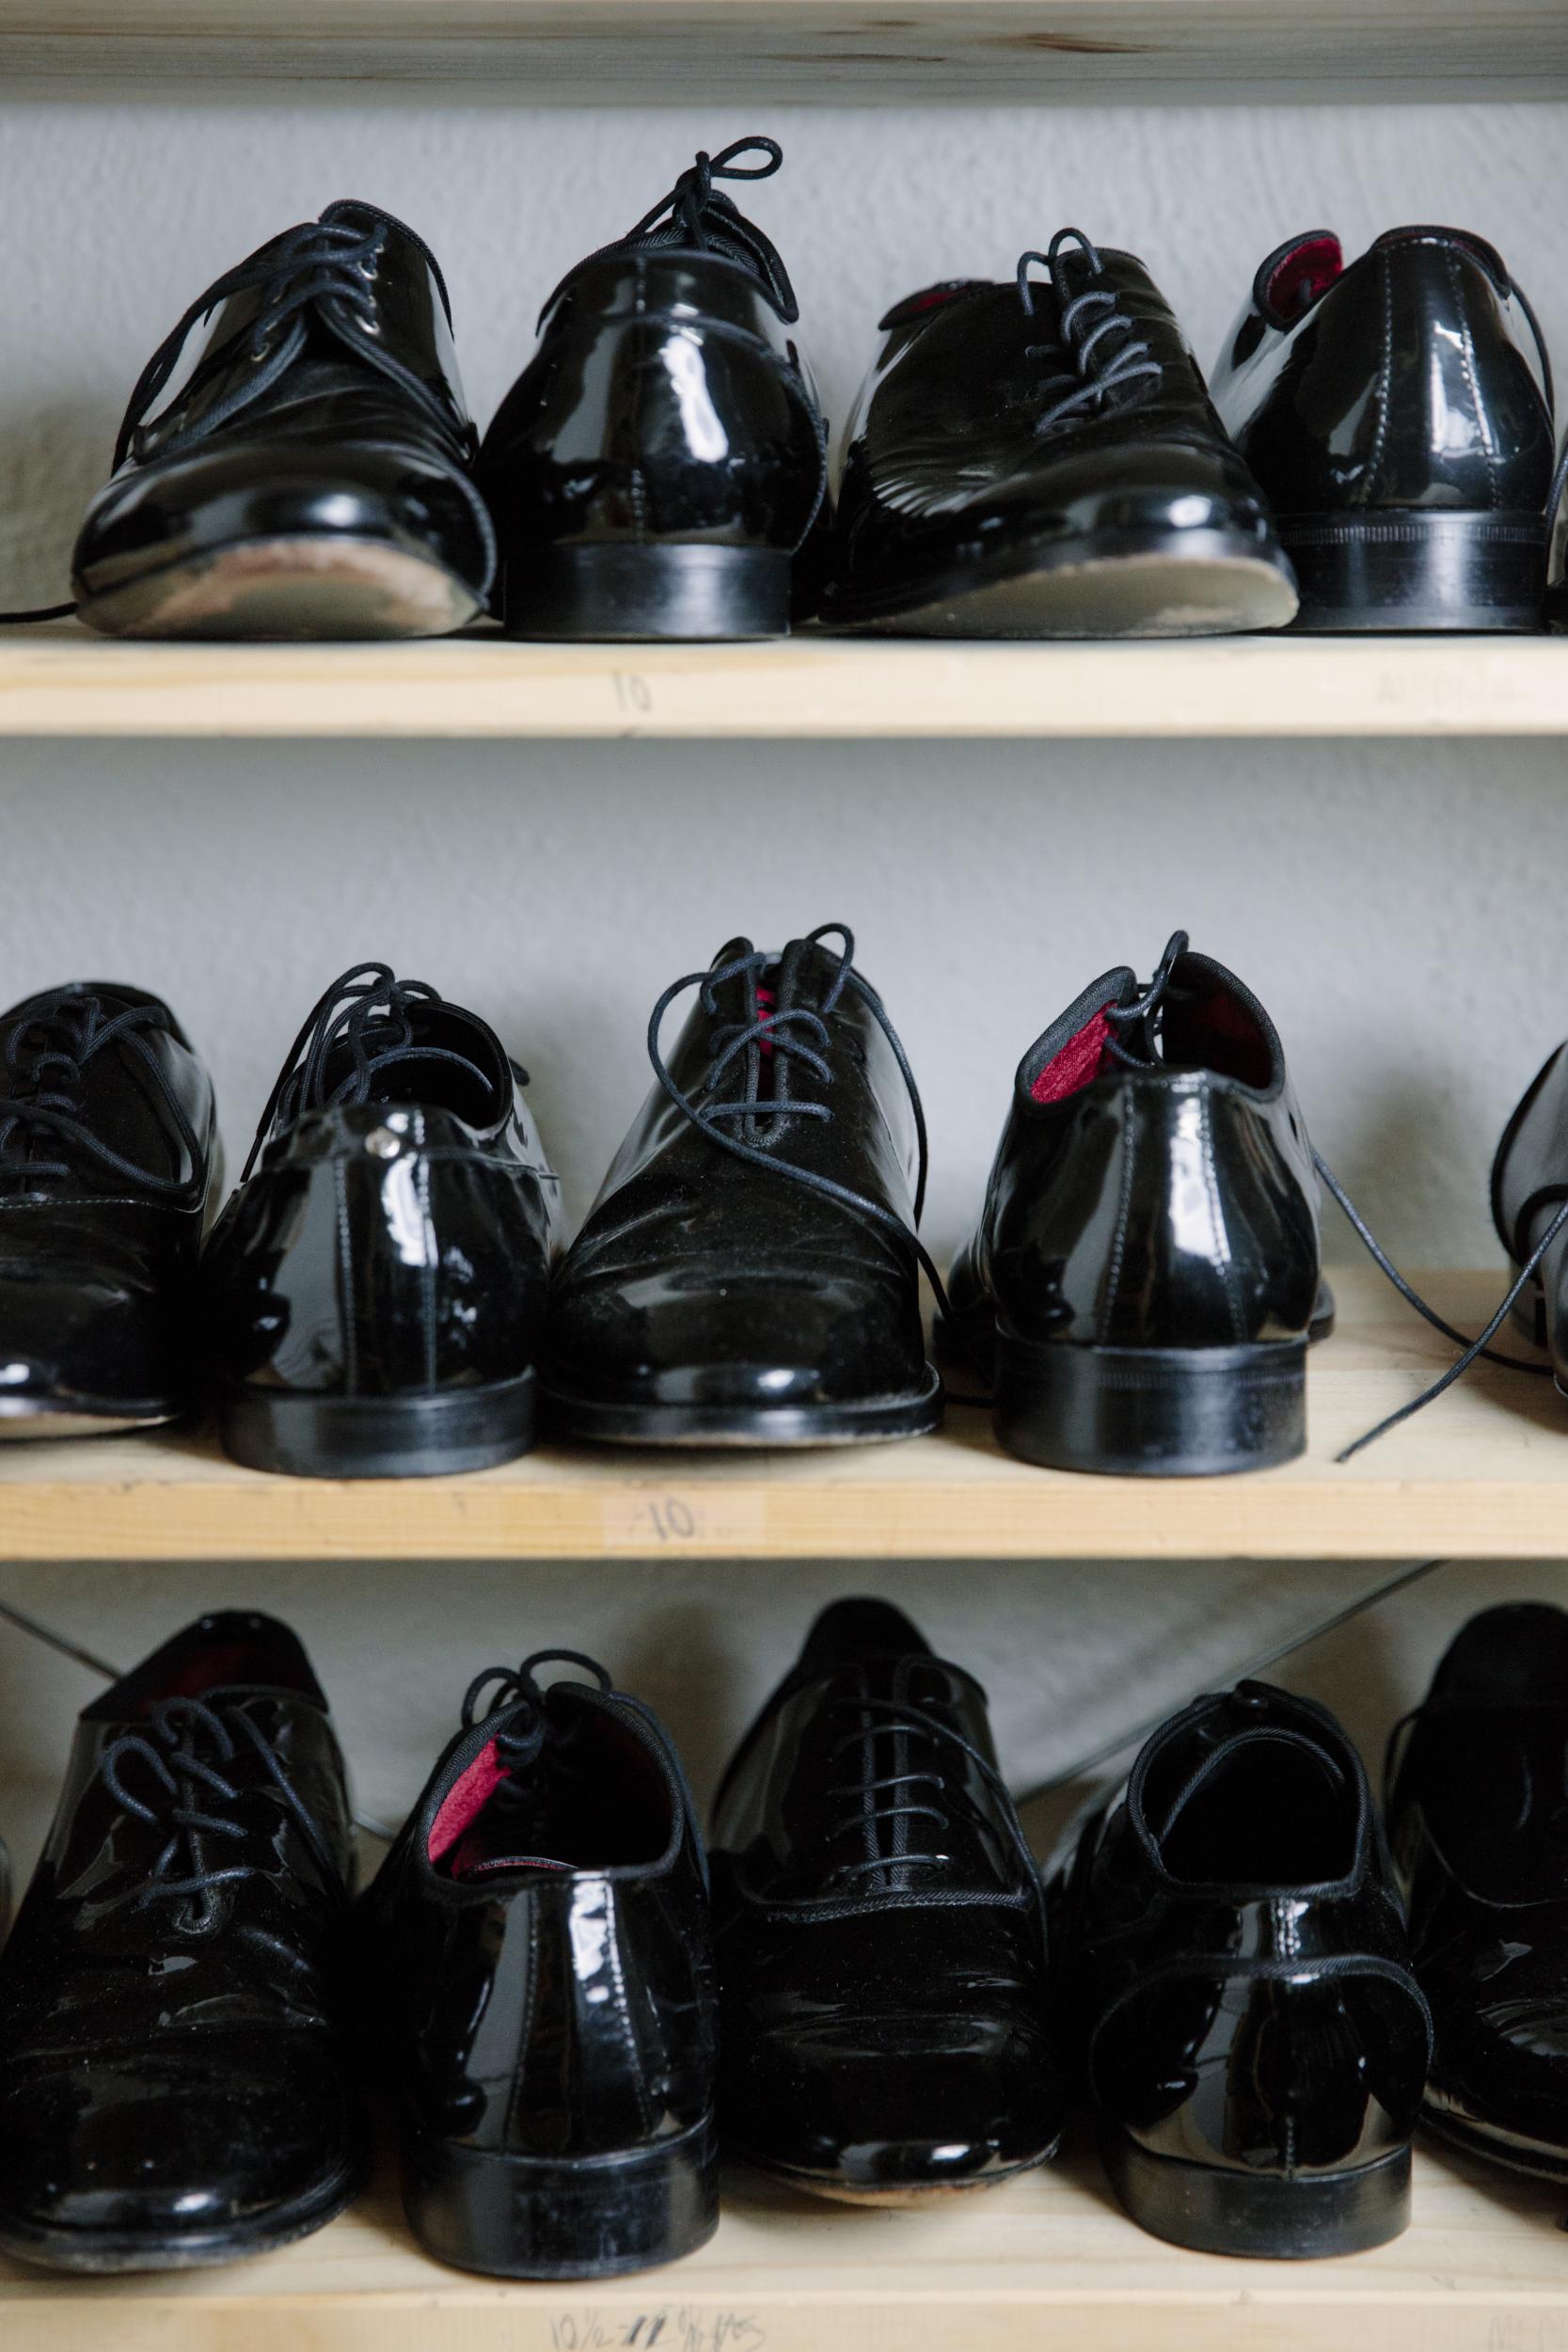 Dozens and dozens of men's shoes line shelves in Ilaria Urbinati's studio.